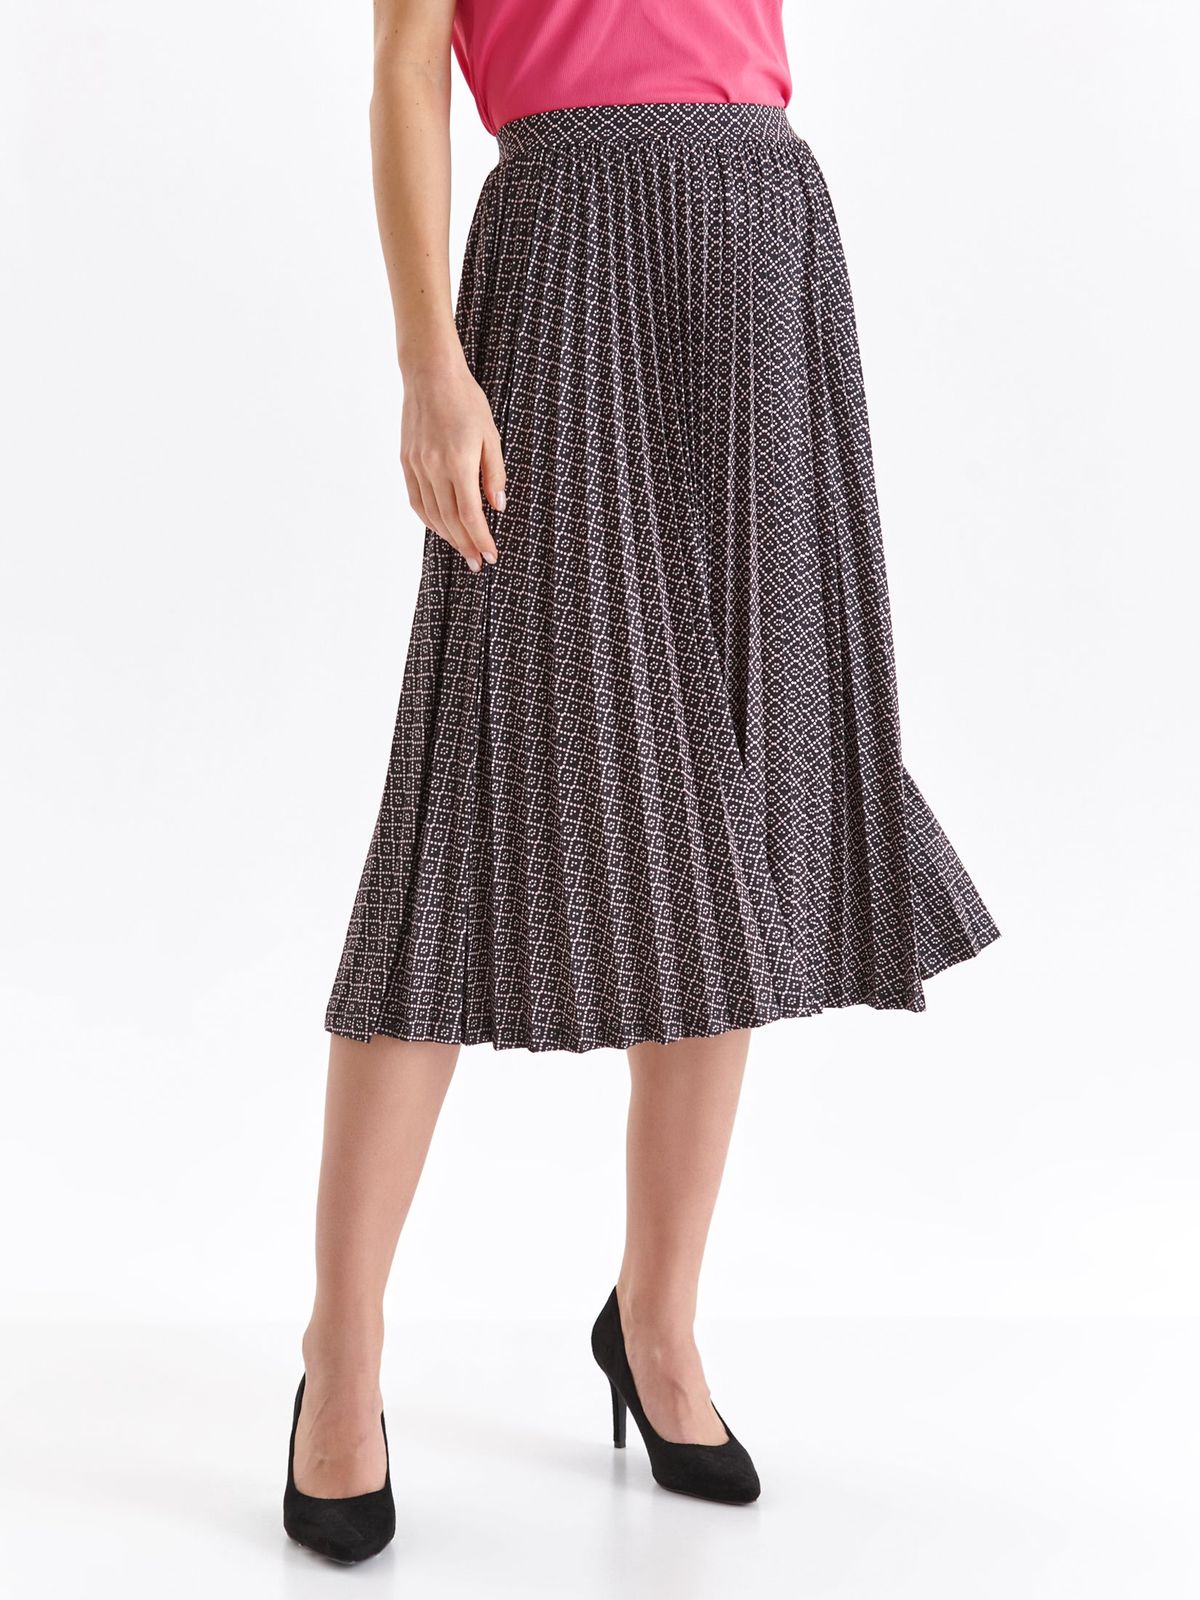 Skirt pleated thin fabric midi cloche with elastic waist